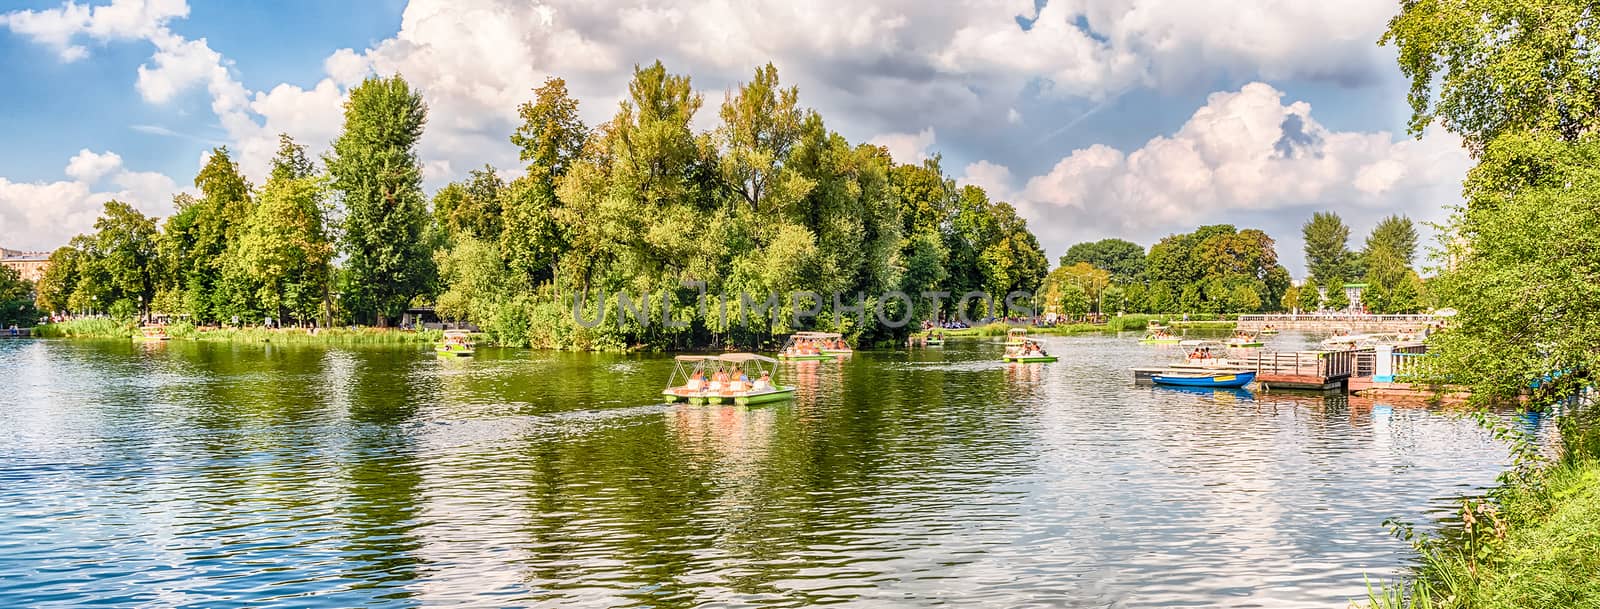 Idillic lake inside Gorky Park, Moscow, Russia by marcorubino